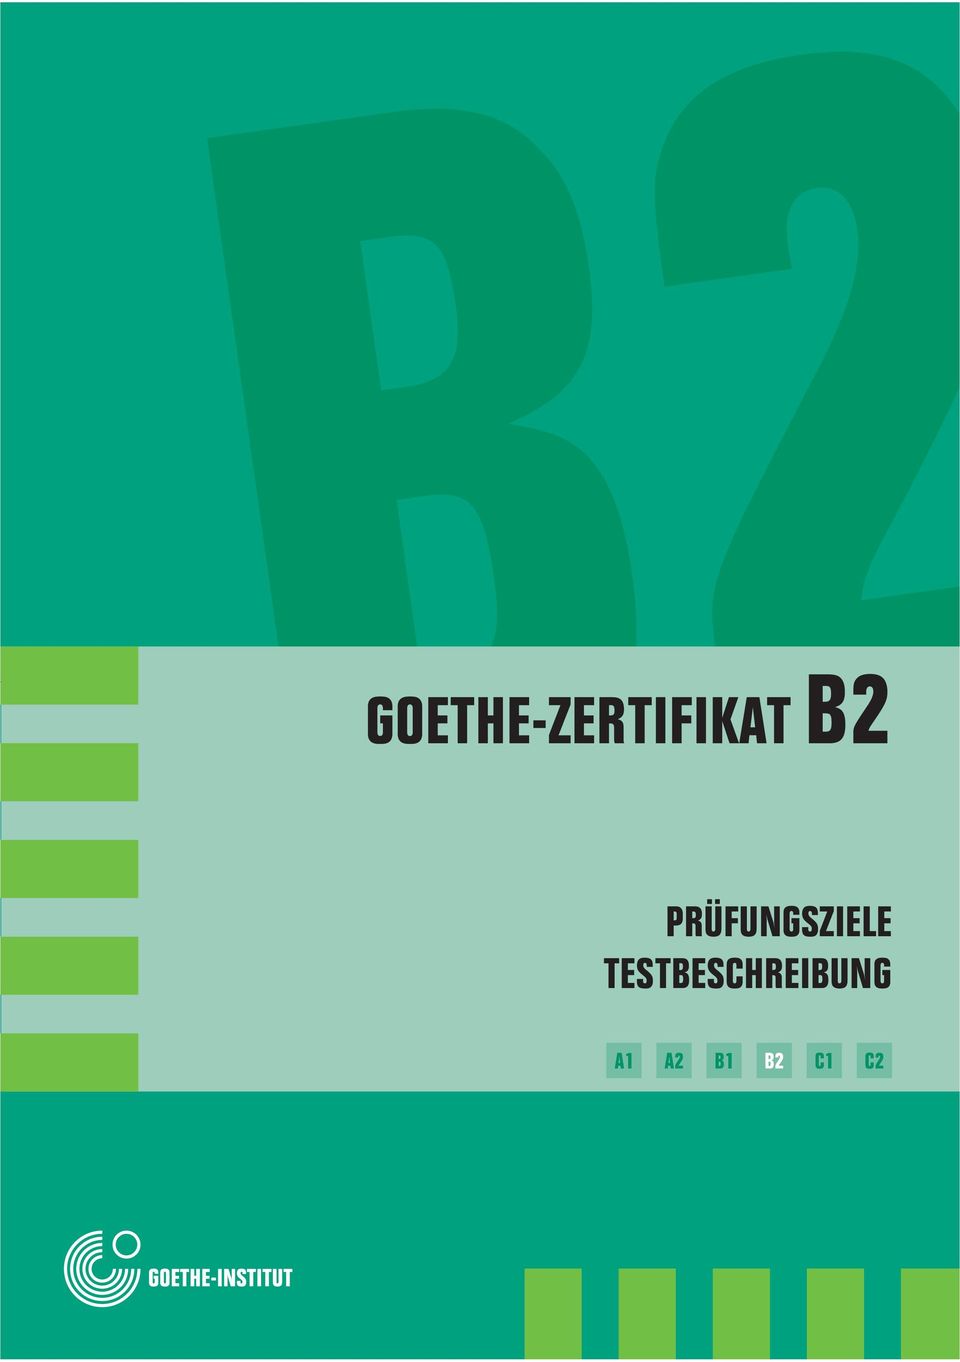 Goethe-Zertifikat B2